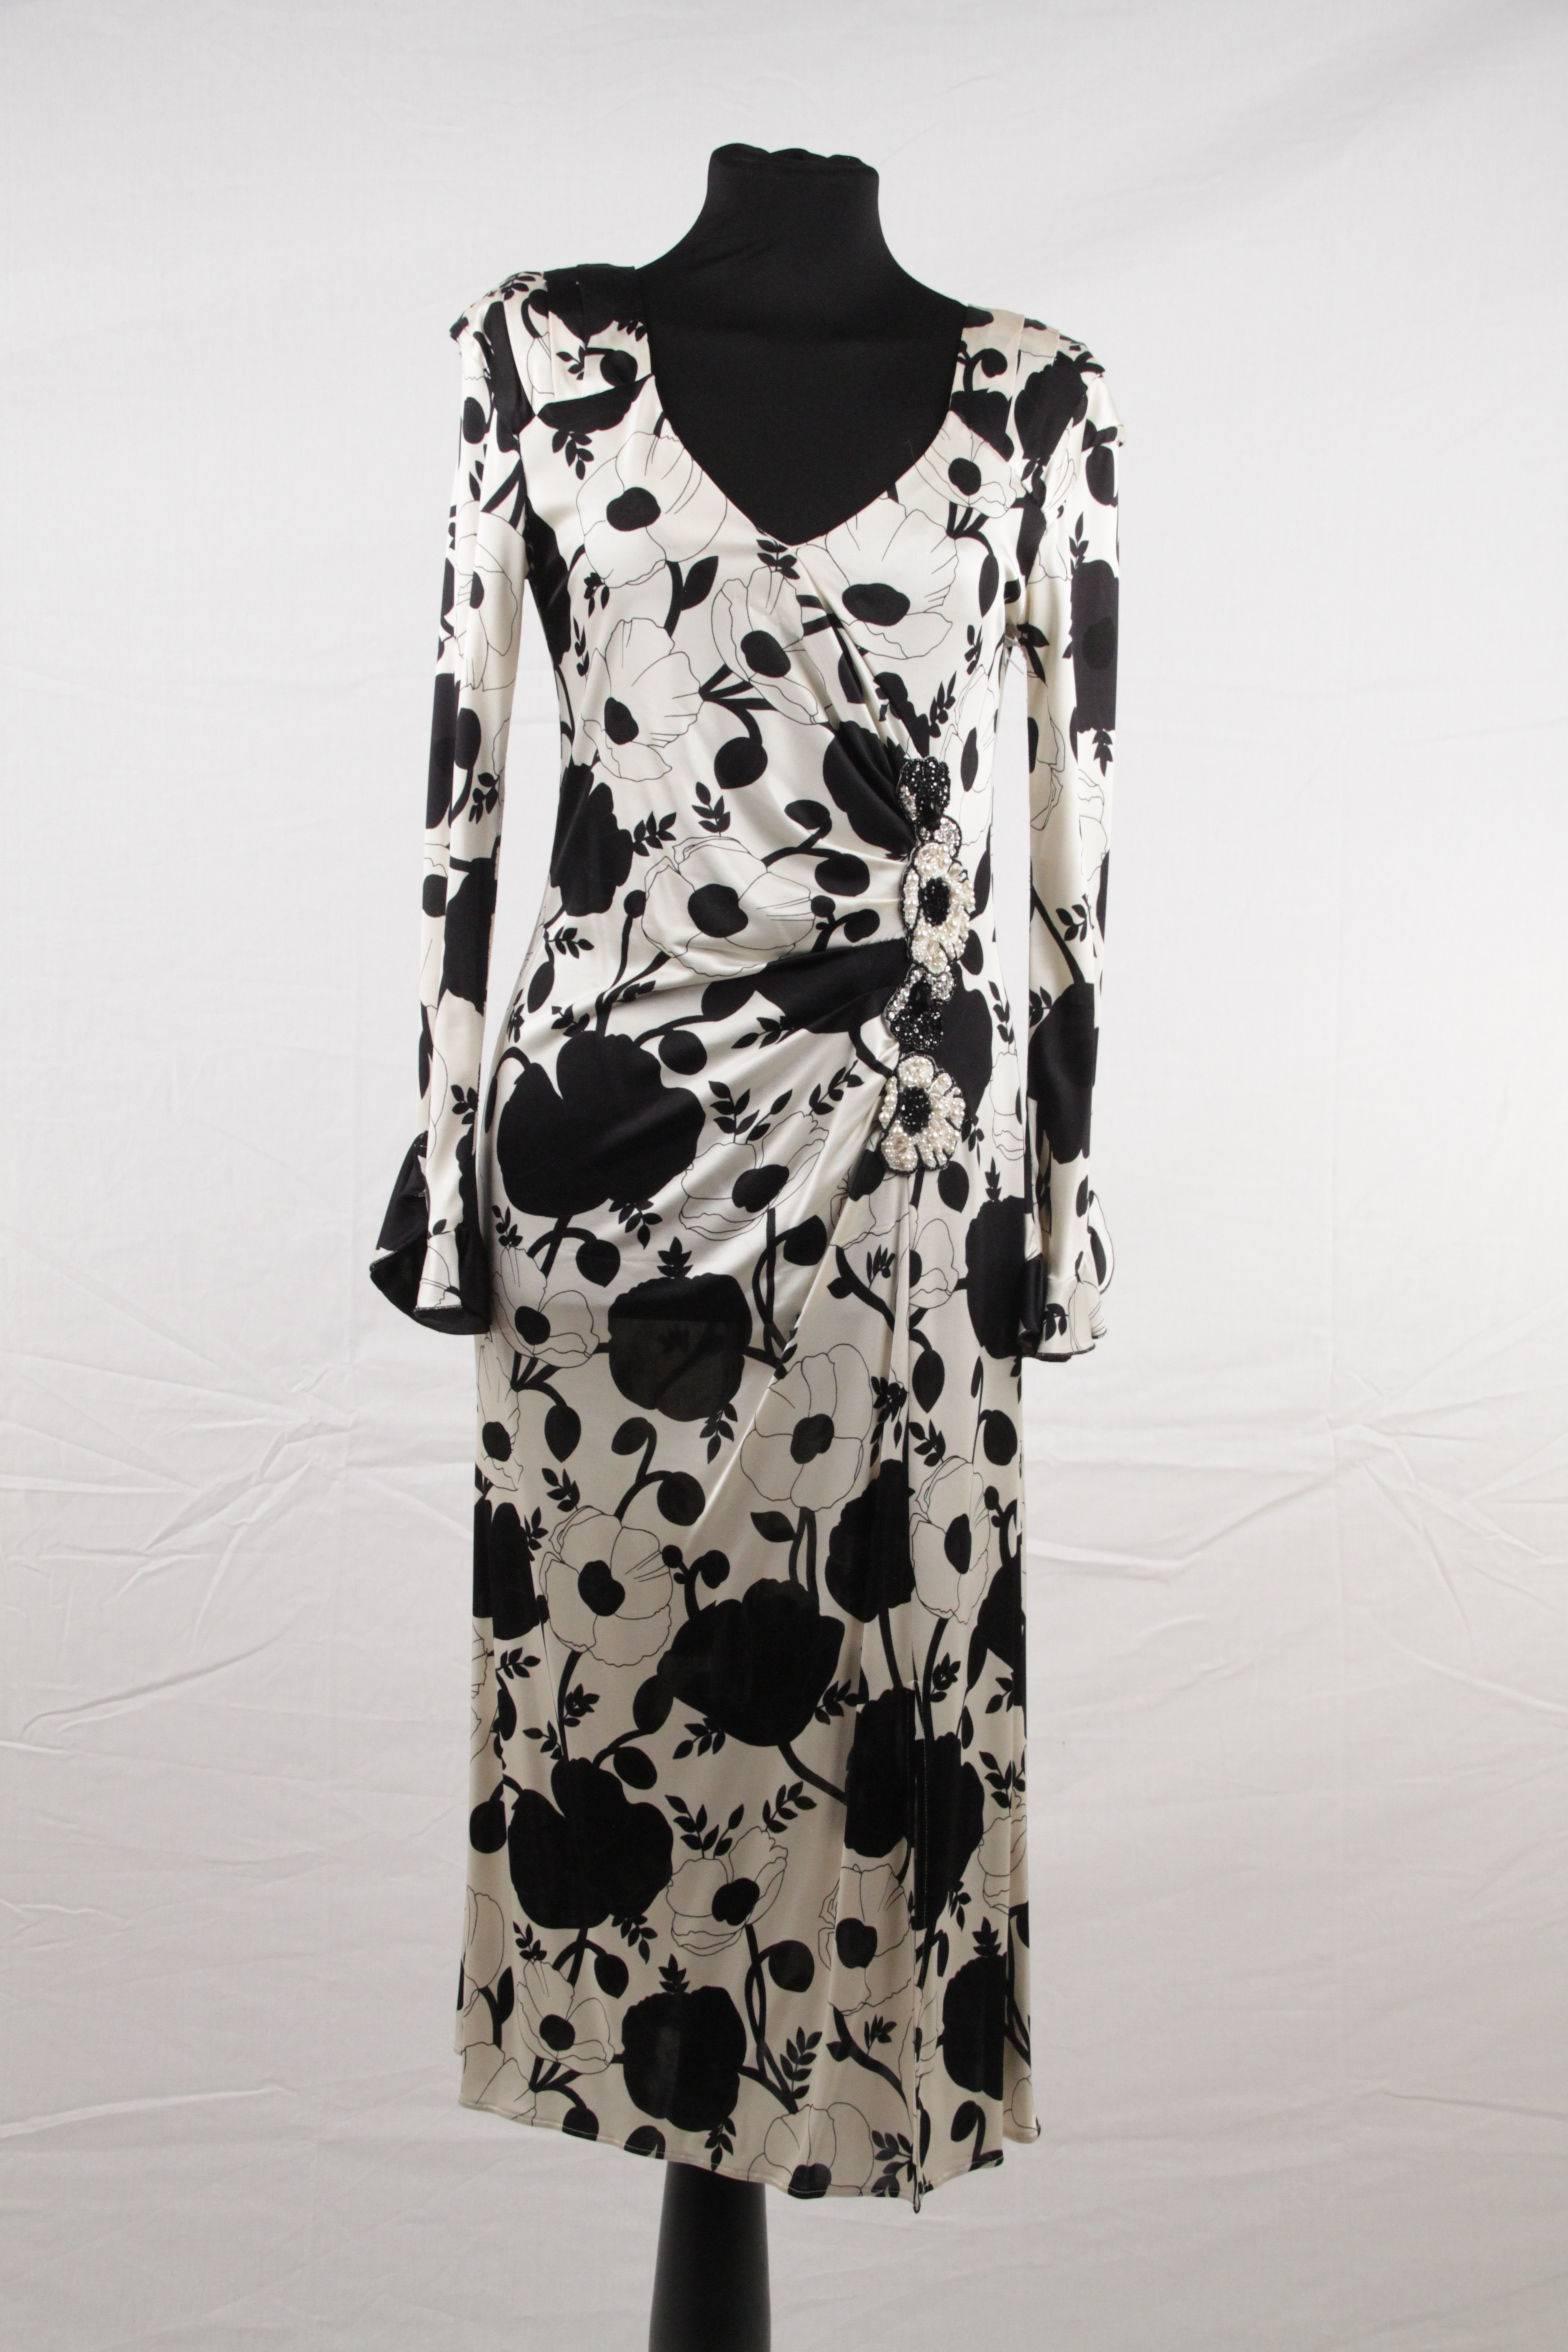 Women's BLUMARINE Black & White Floral SHEATH DRESS Wrap Style w/ Beading